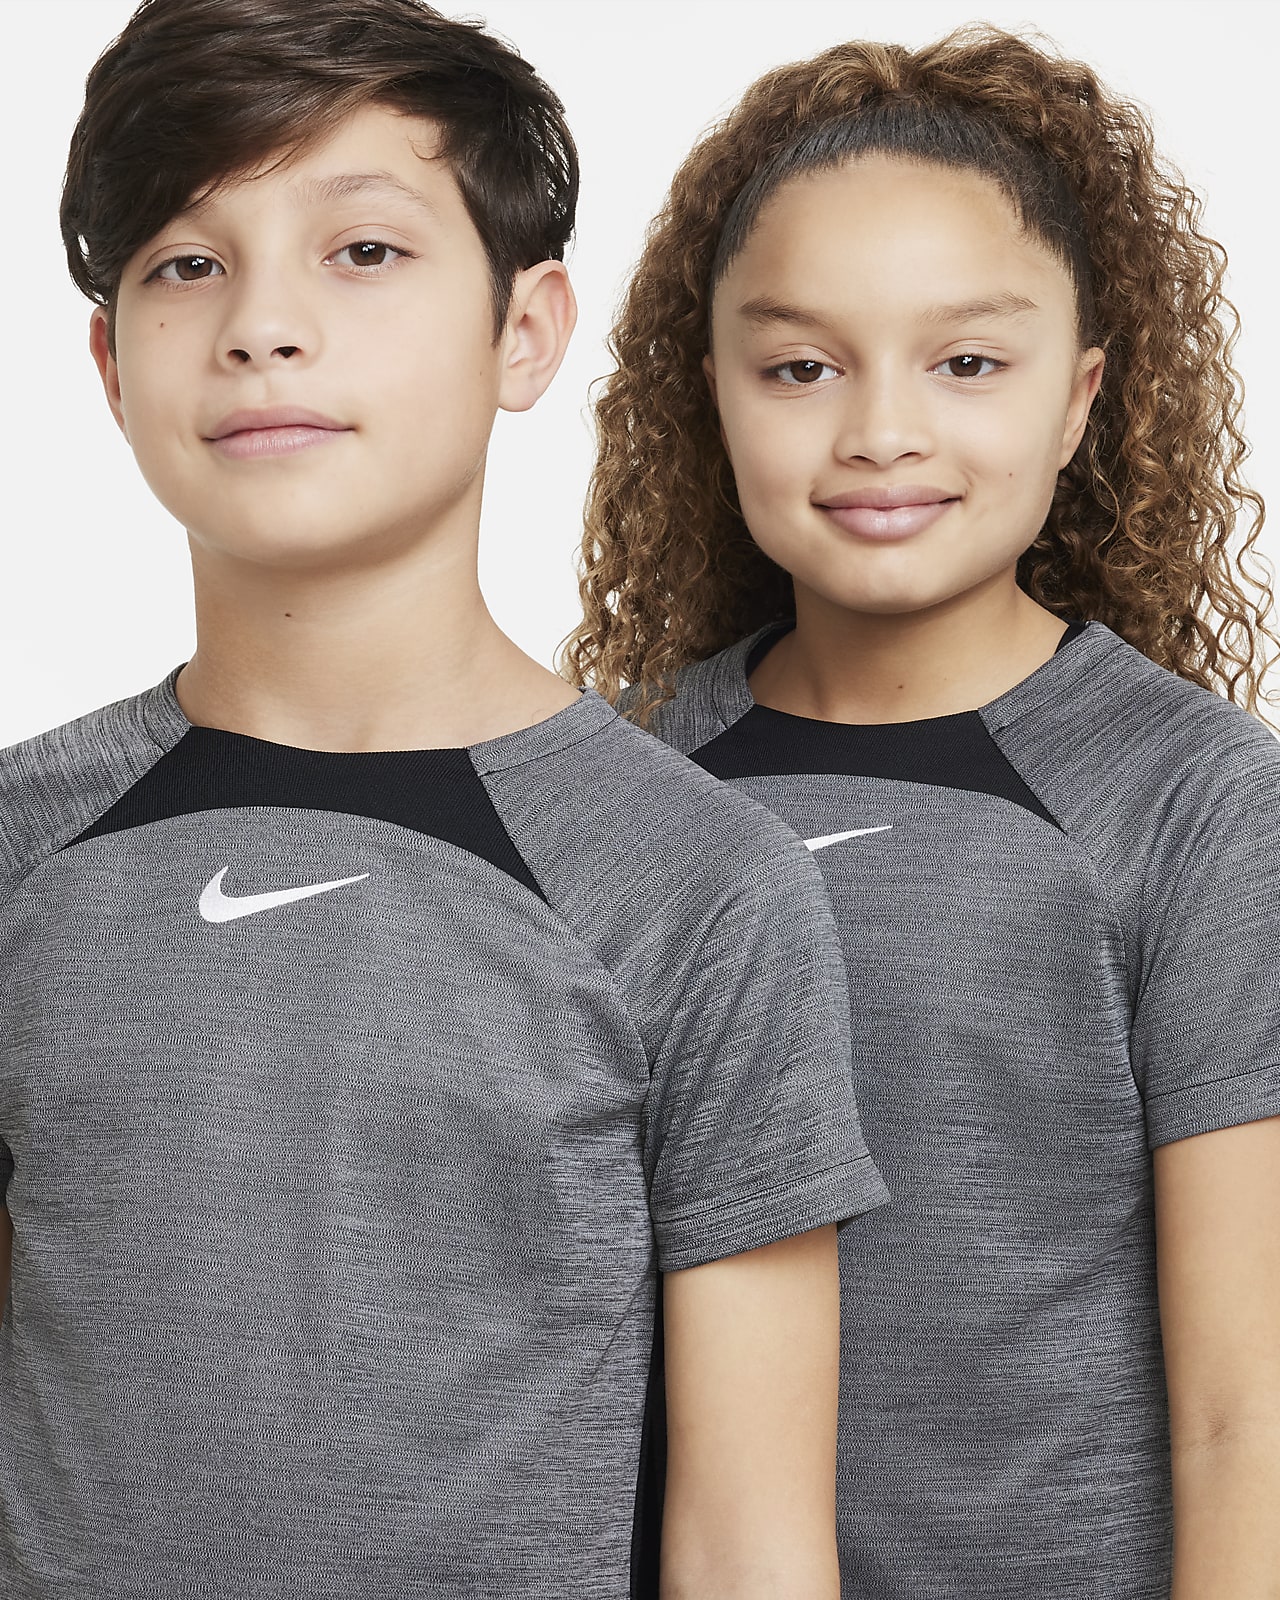 Nike Academy Kids Jersey - DH8369